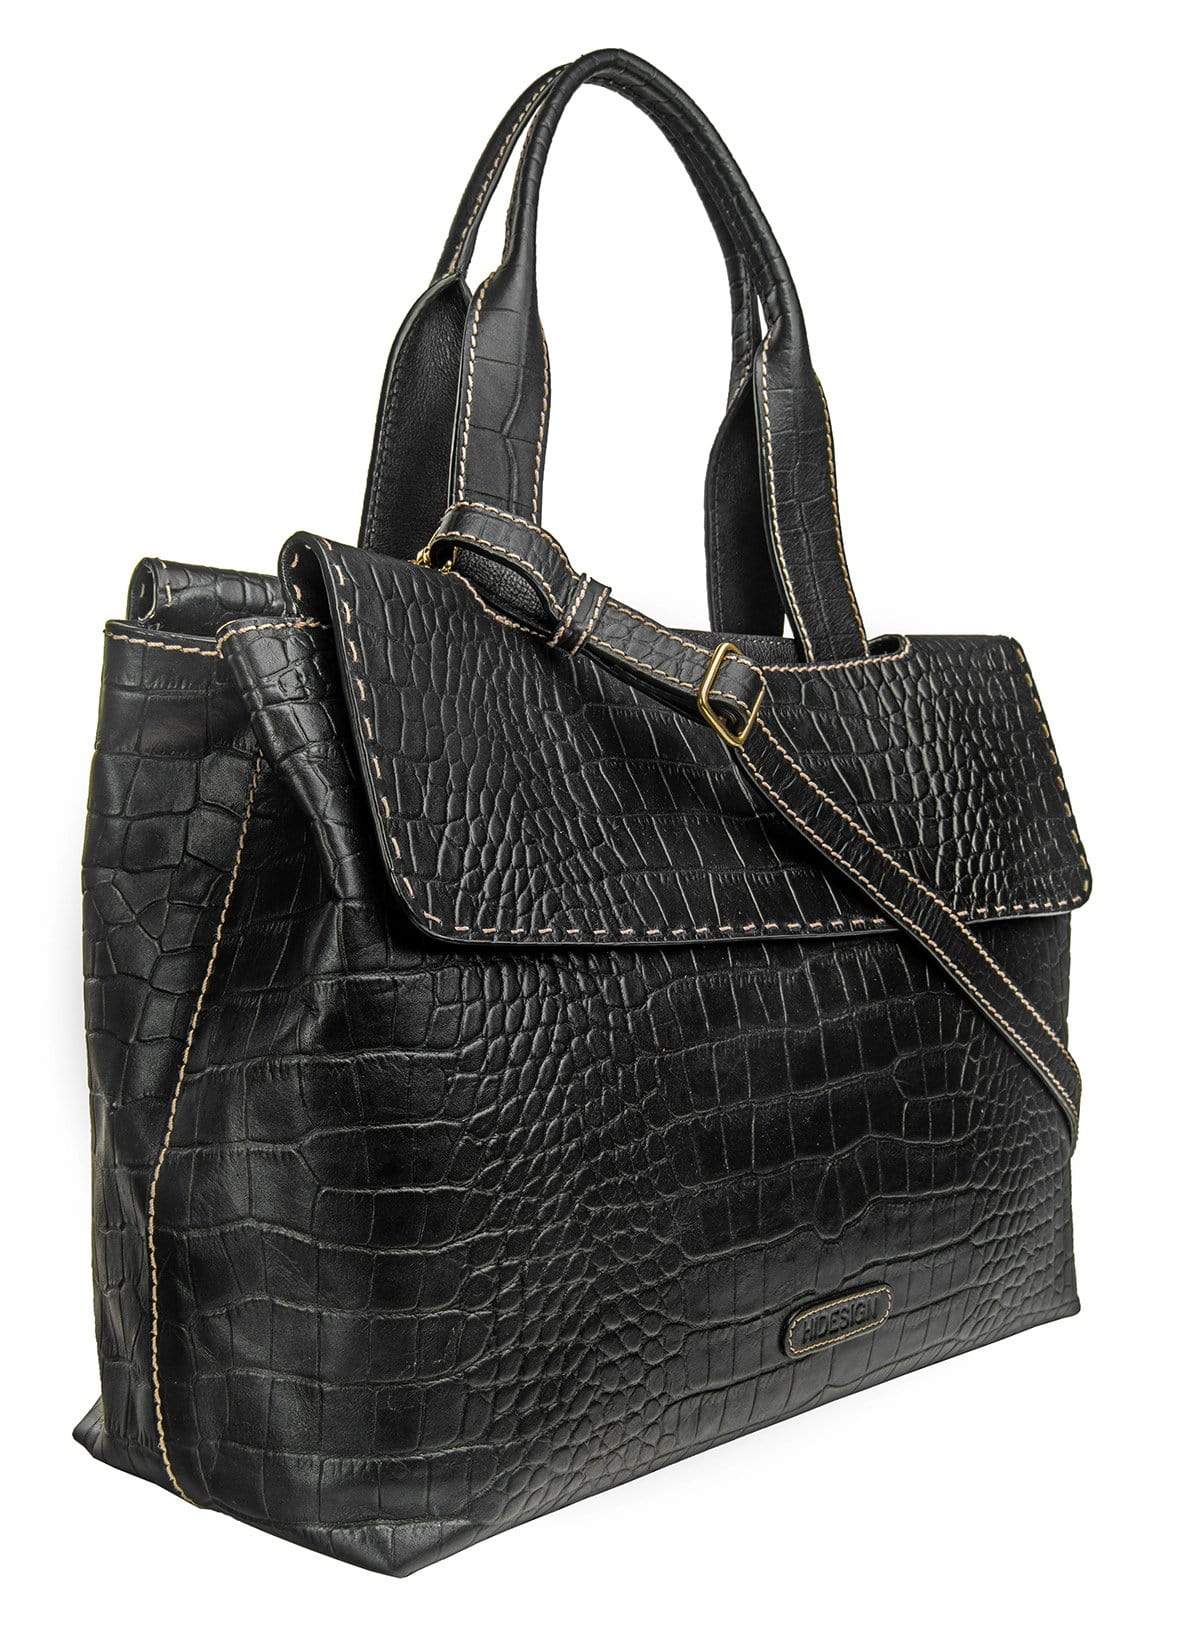 Hidesign Women's Leather Work Bag - Brown